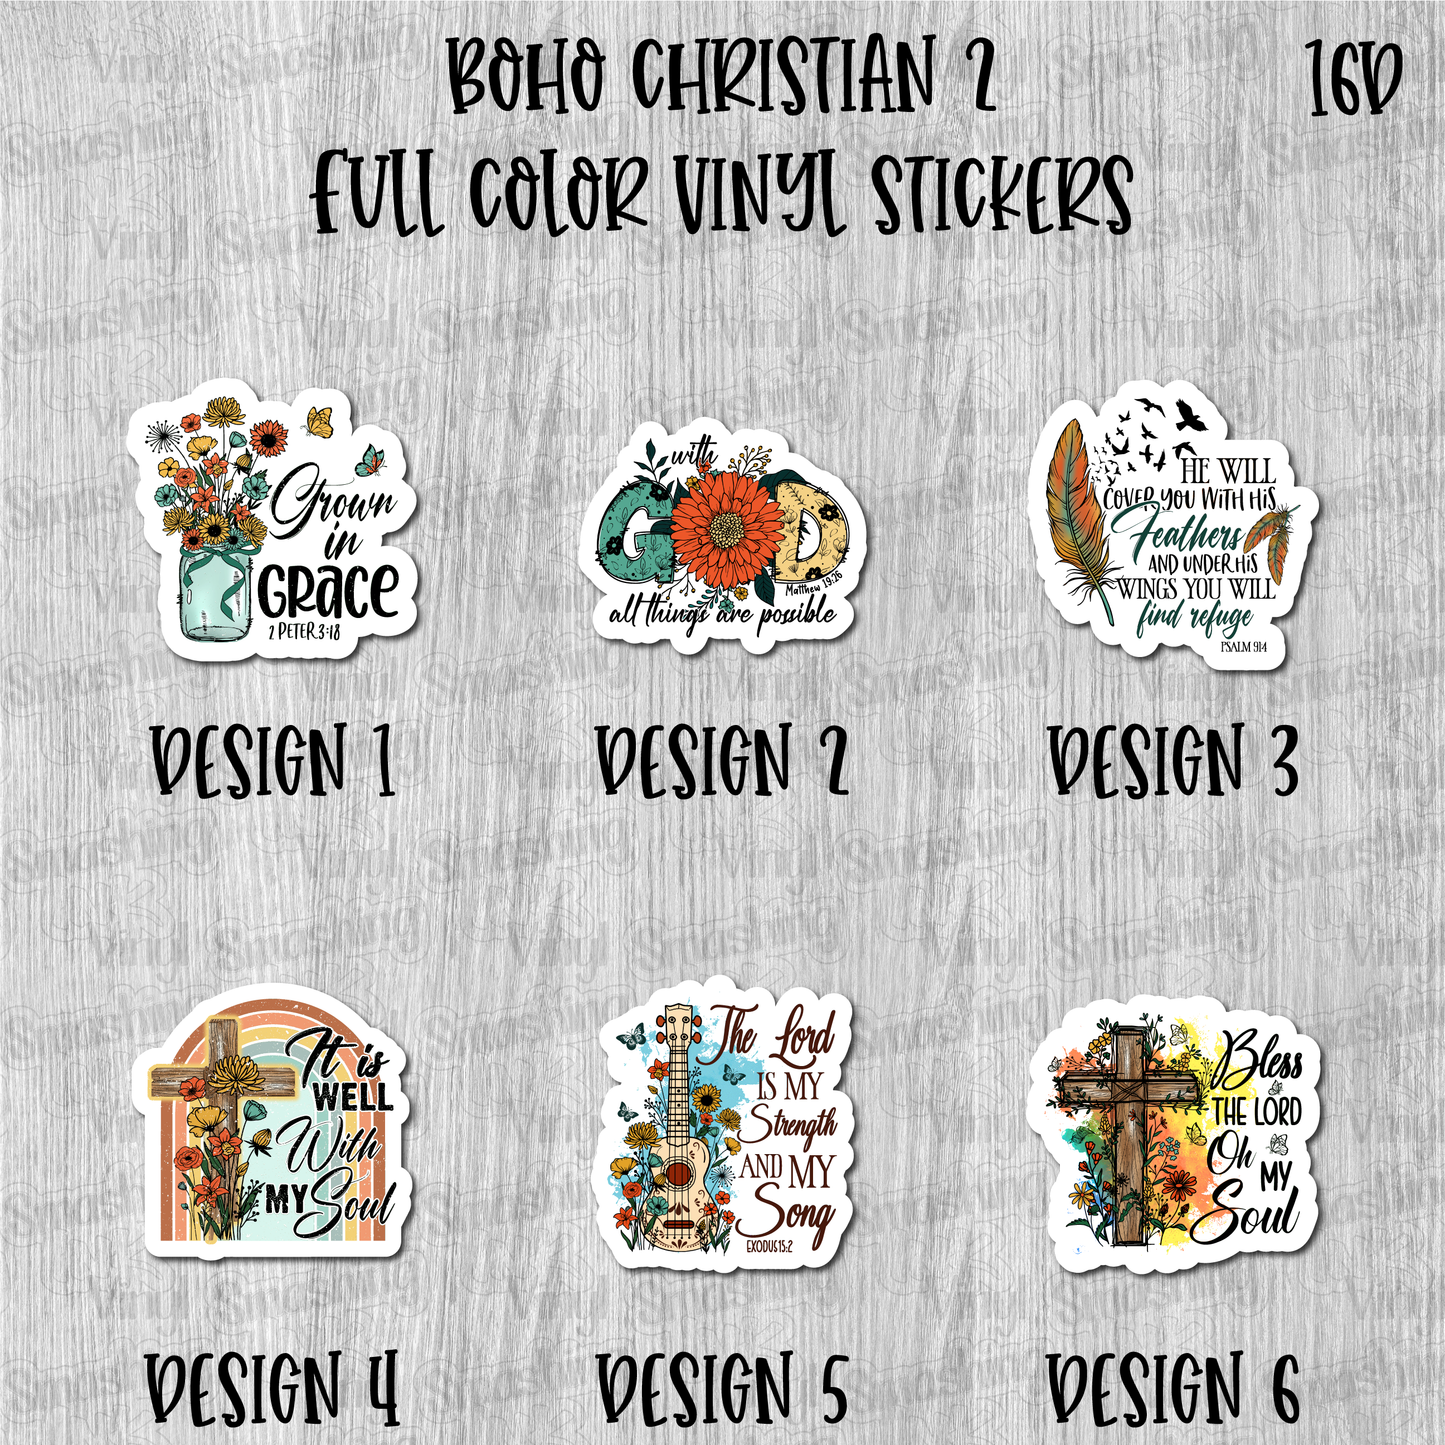 Boho Christian 2 - Full Color Vinyl Stickers (SHIPS IN 3-7 BUS DAYS)